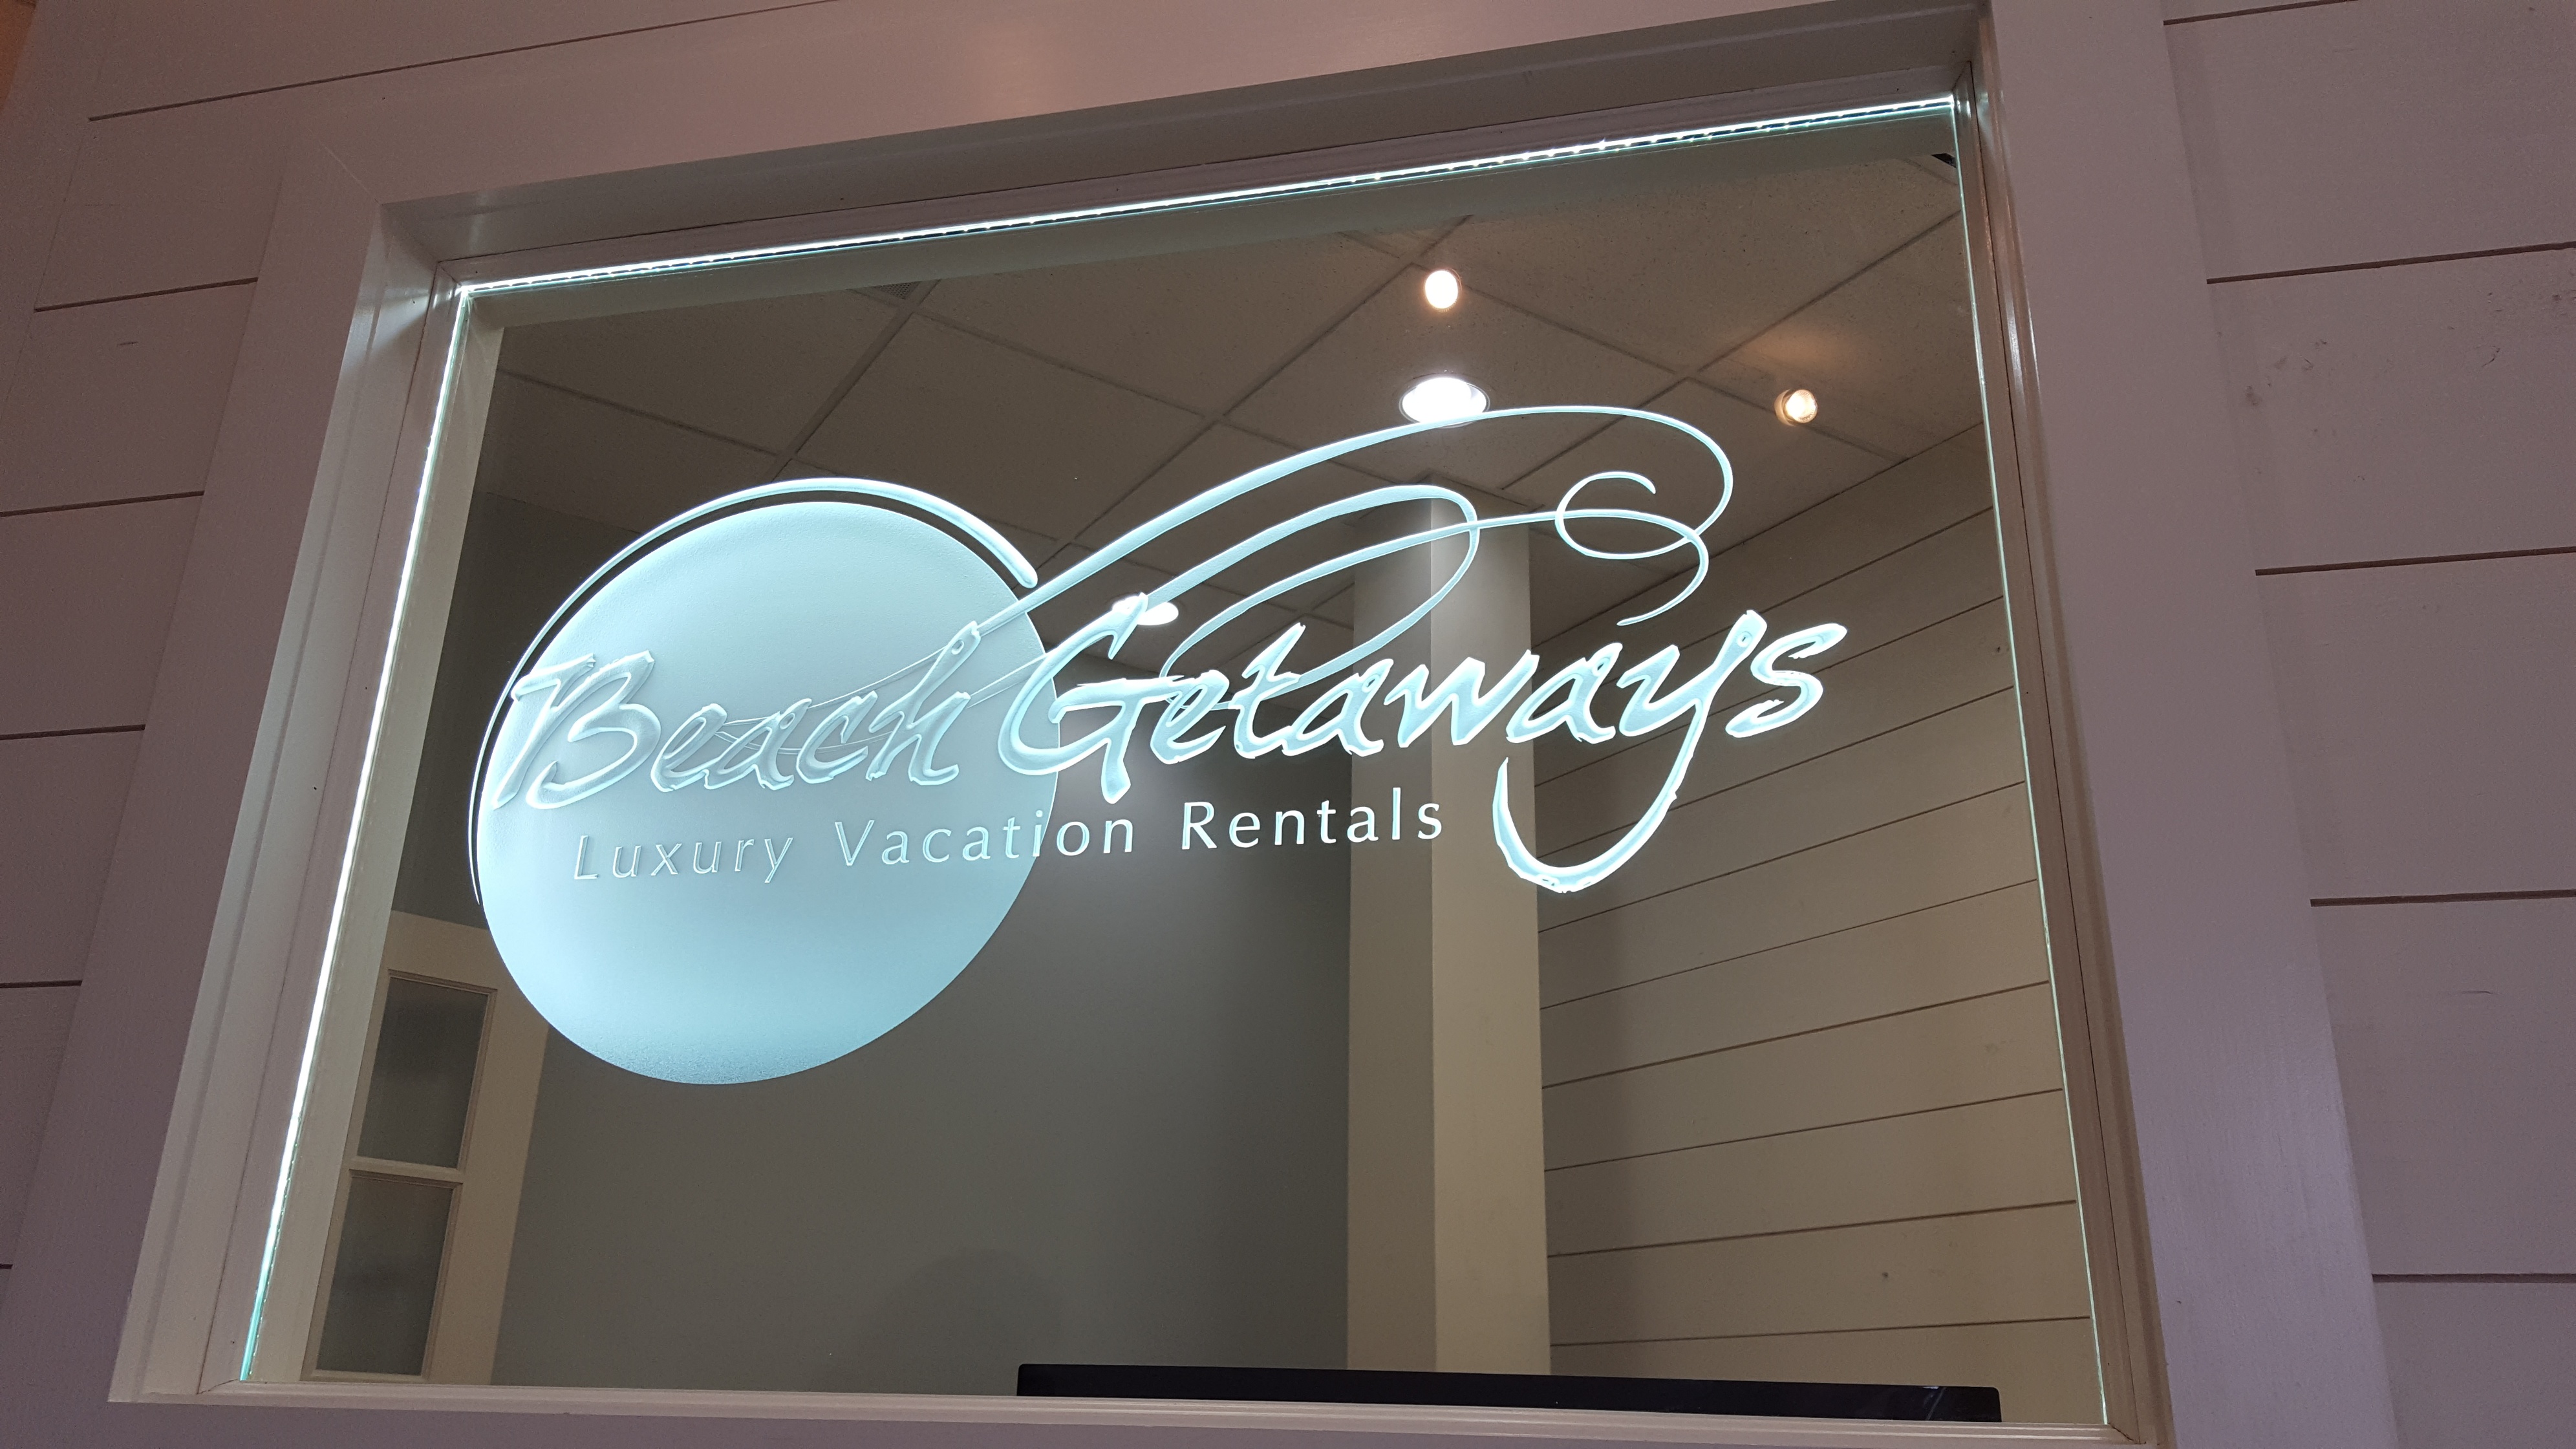 Beach Getaways  Luxury Vacation Rentals logo sandblasted on glass by Glass Graphics